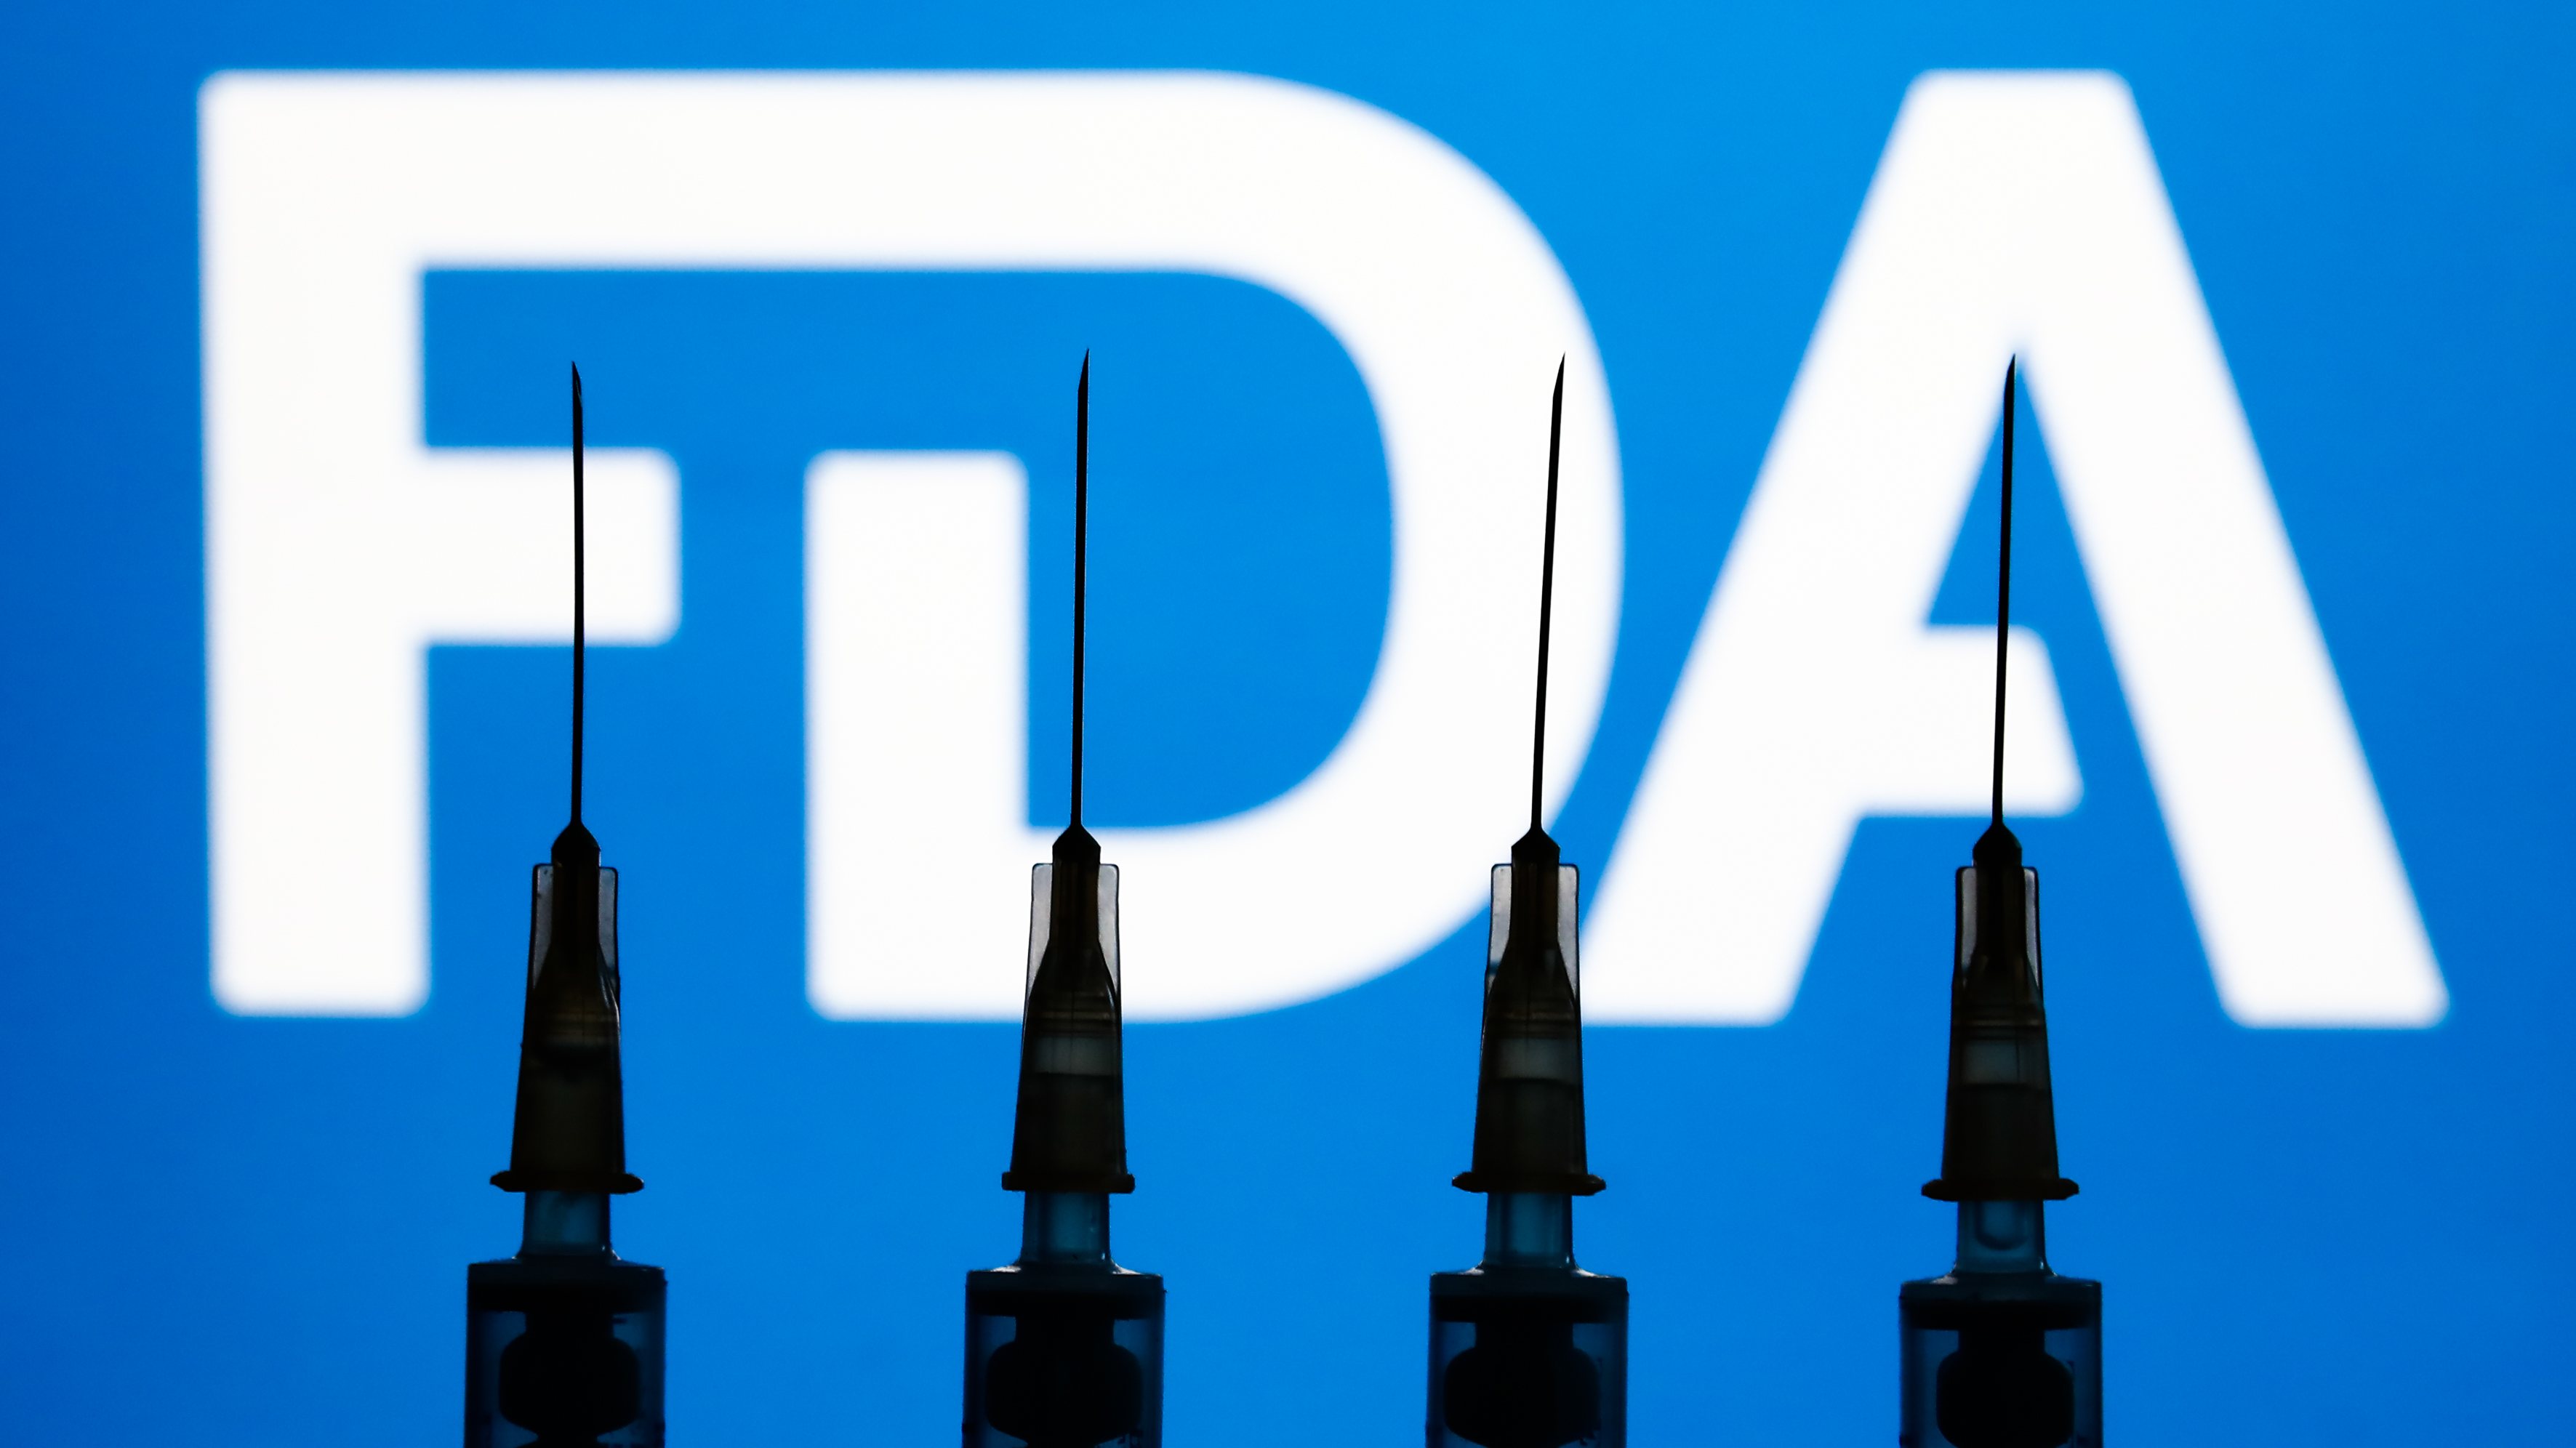 FDA logotipo